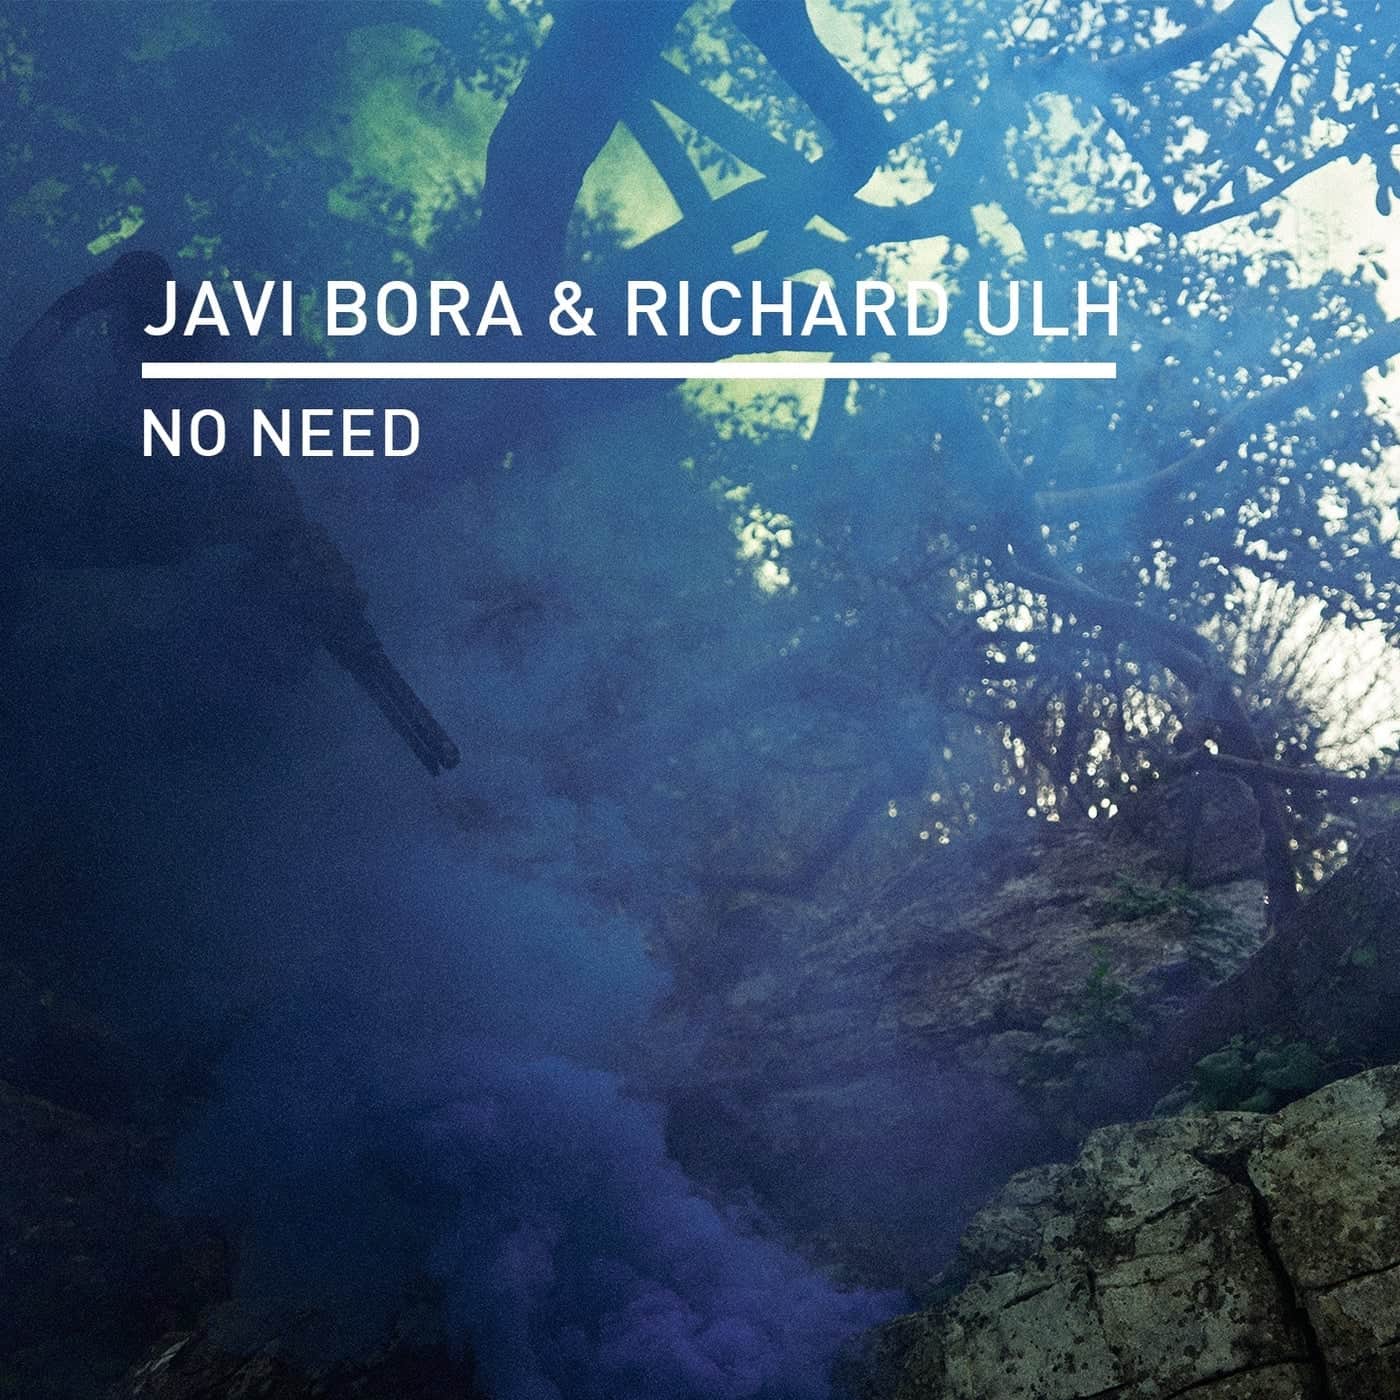 Download Javi Bora, Richard Ulh - No Need on Electrobuzz